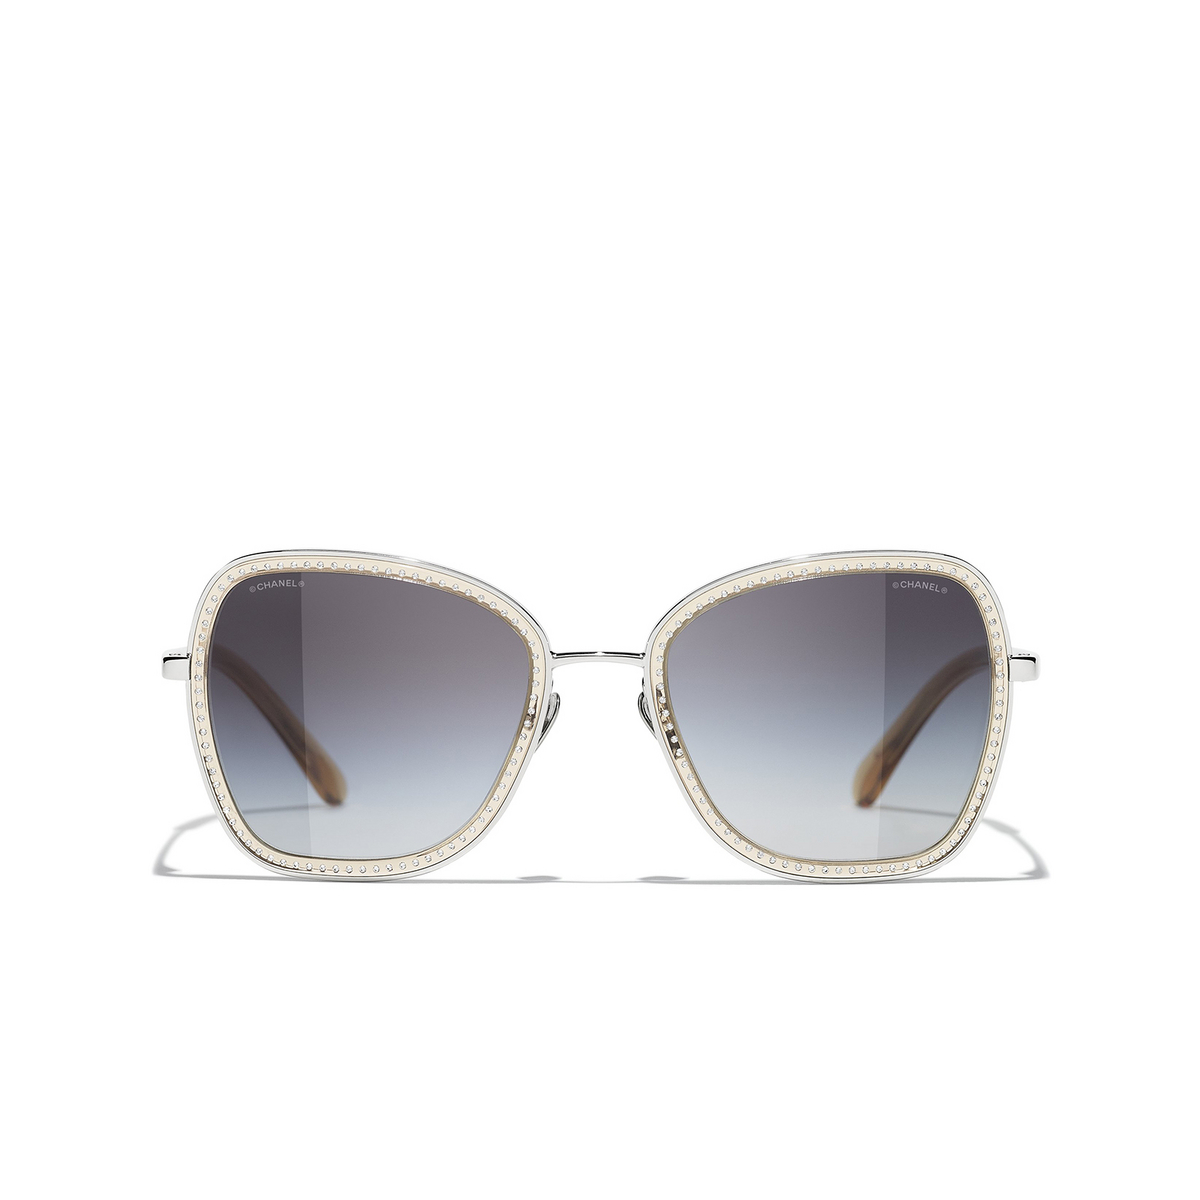 CHANEL square Sunglasses C475S6 Silver - front view